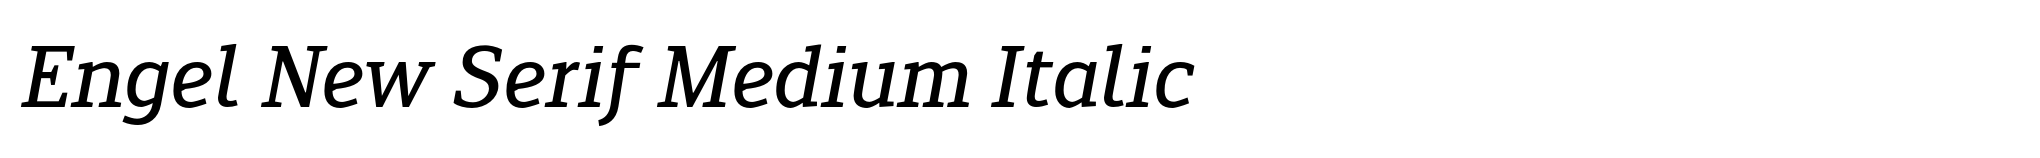 Engel New Serif Medium Italic image